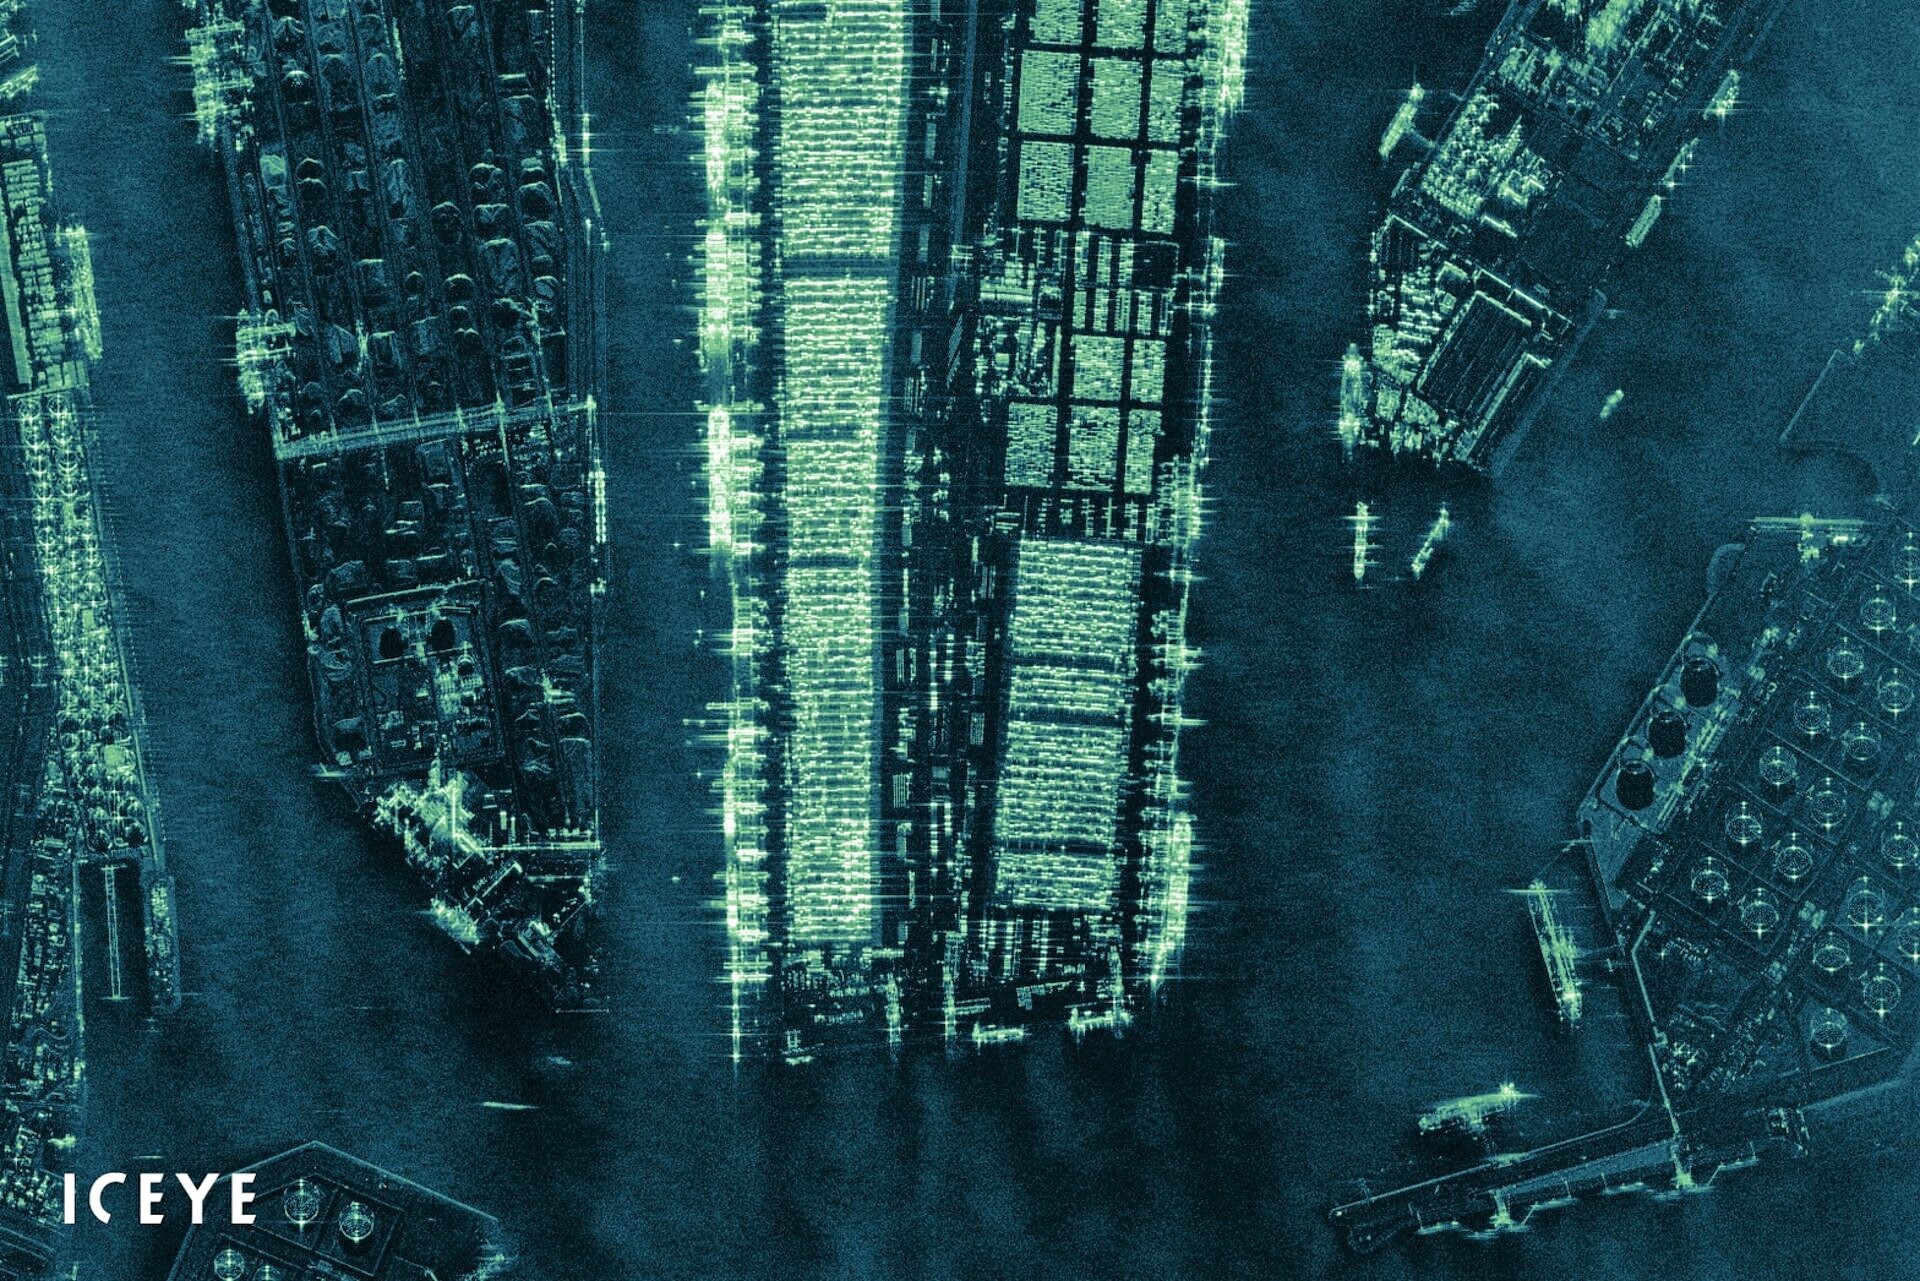 Rotterdam port from ICEYE